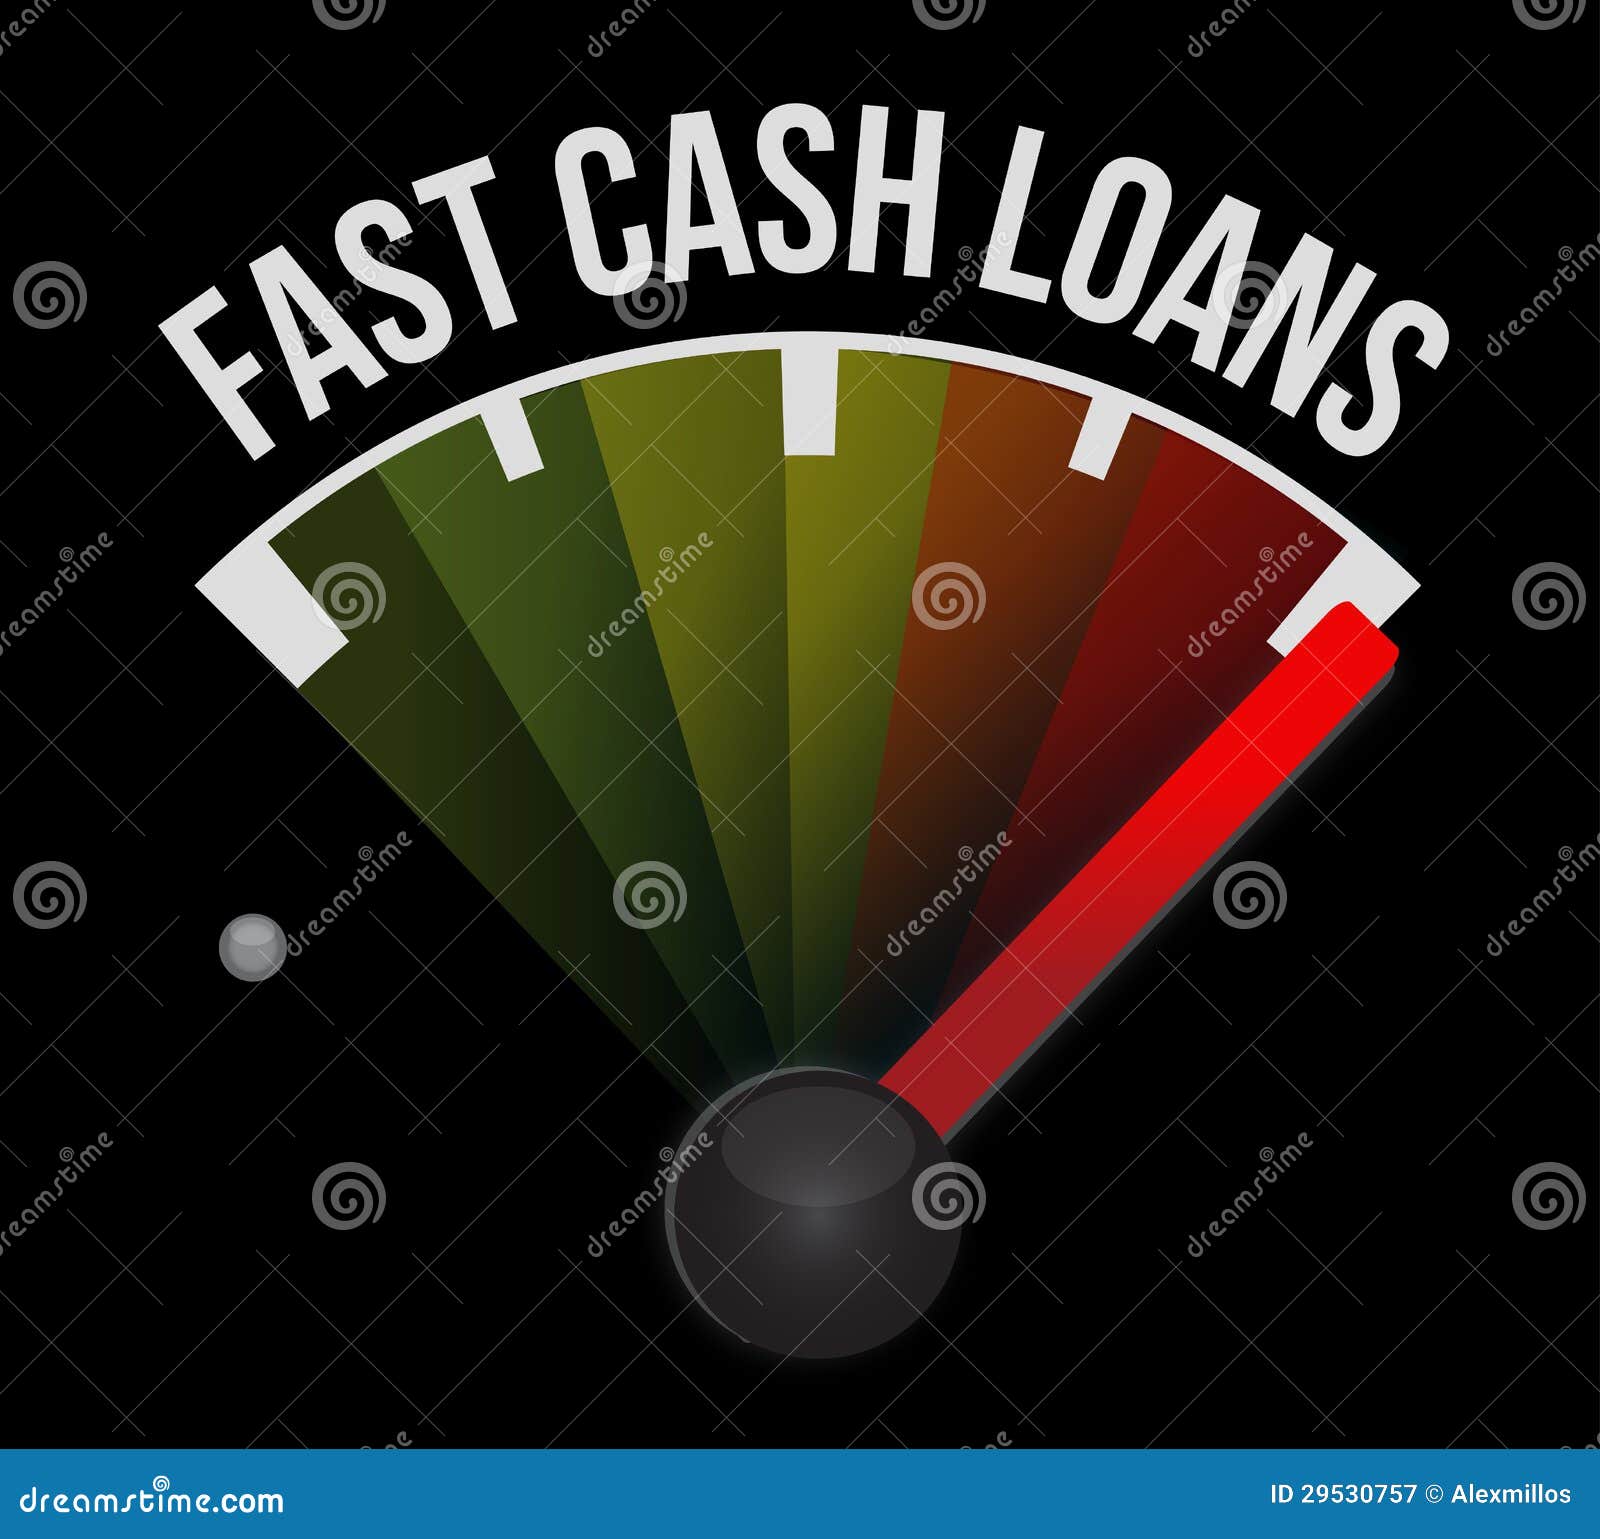 Fast Cash Loans Speedometer Illustration Design Stock Illustration Illustration of equipment